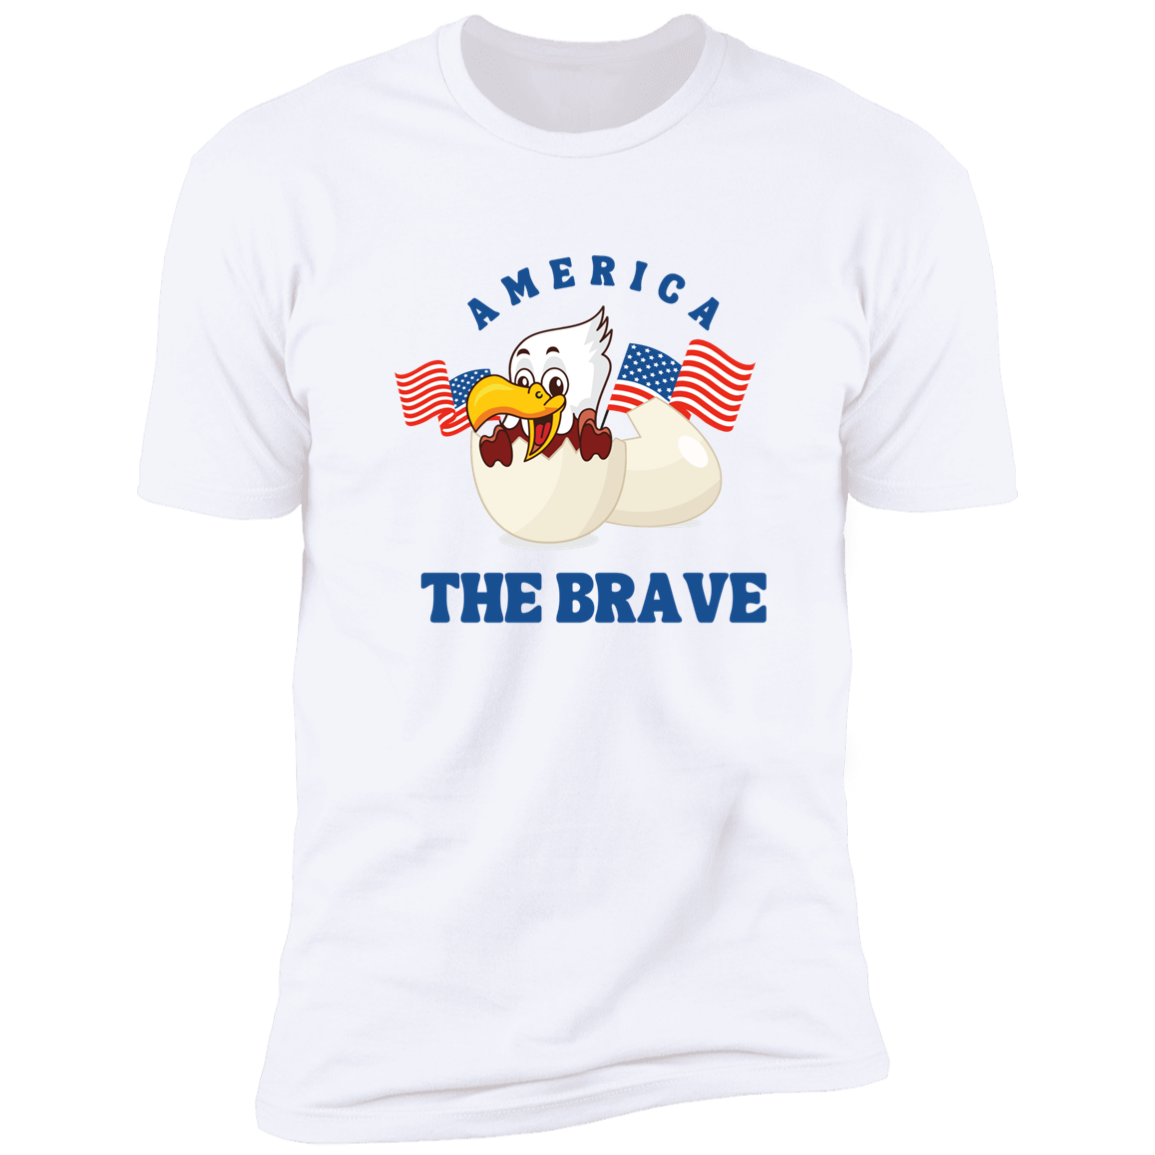 America the Brave Tee